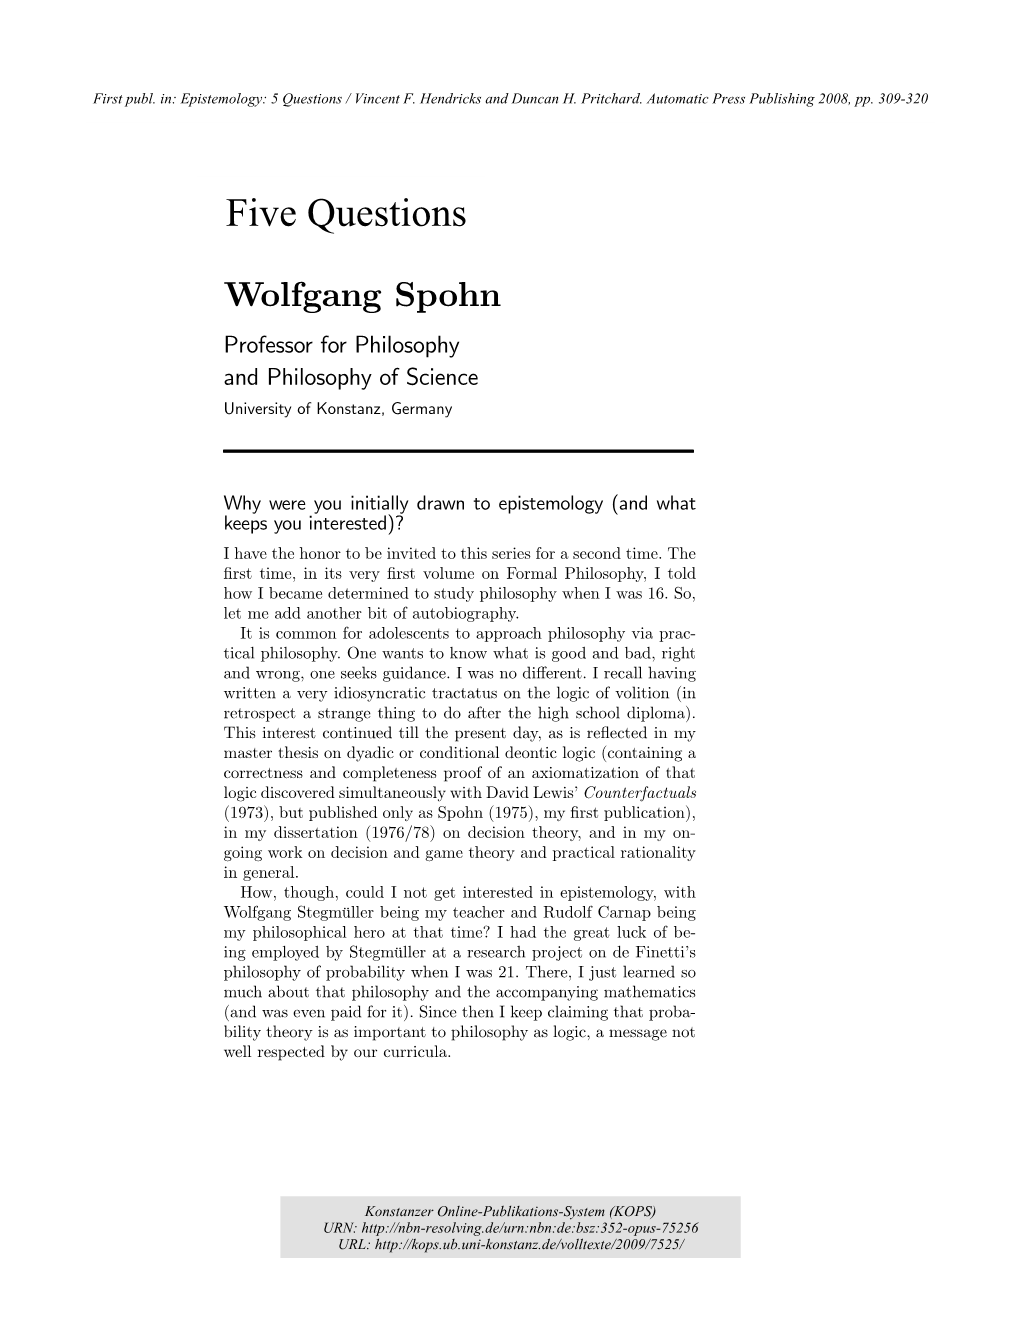 Five Questions : Wolfgang Spohn